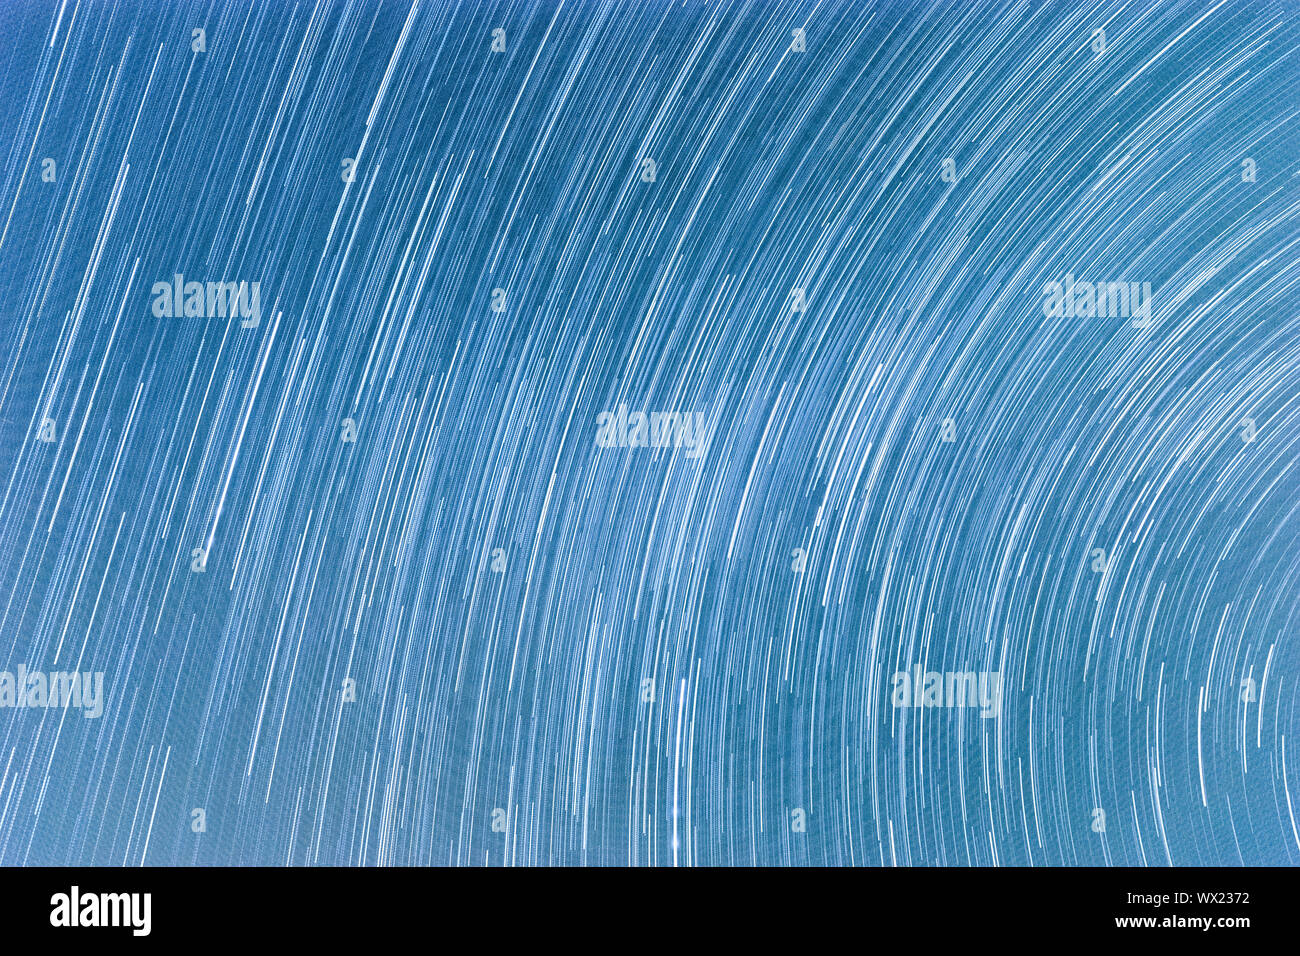 star trails sky background Stock Photo